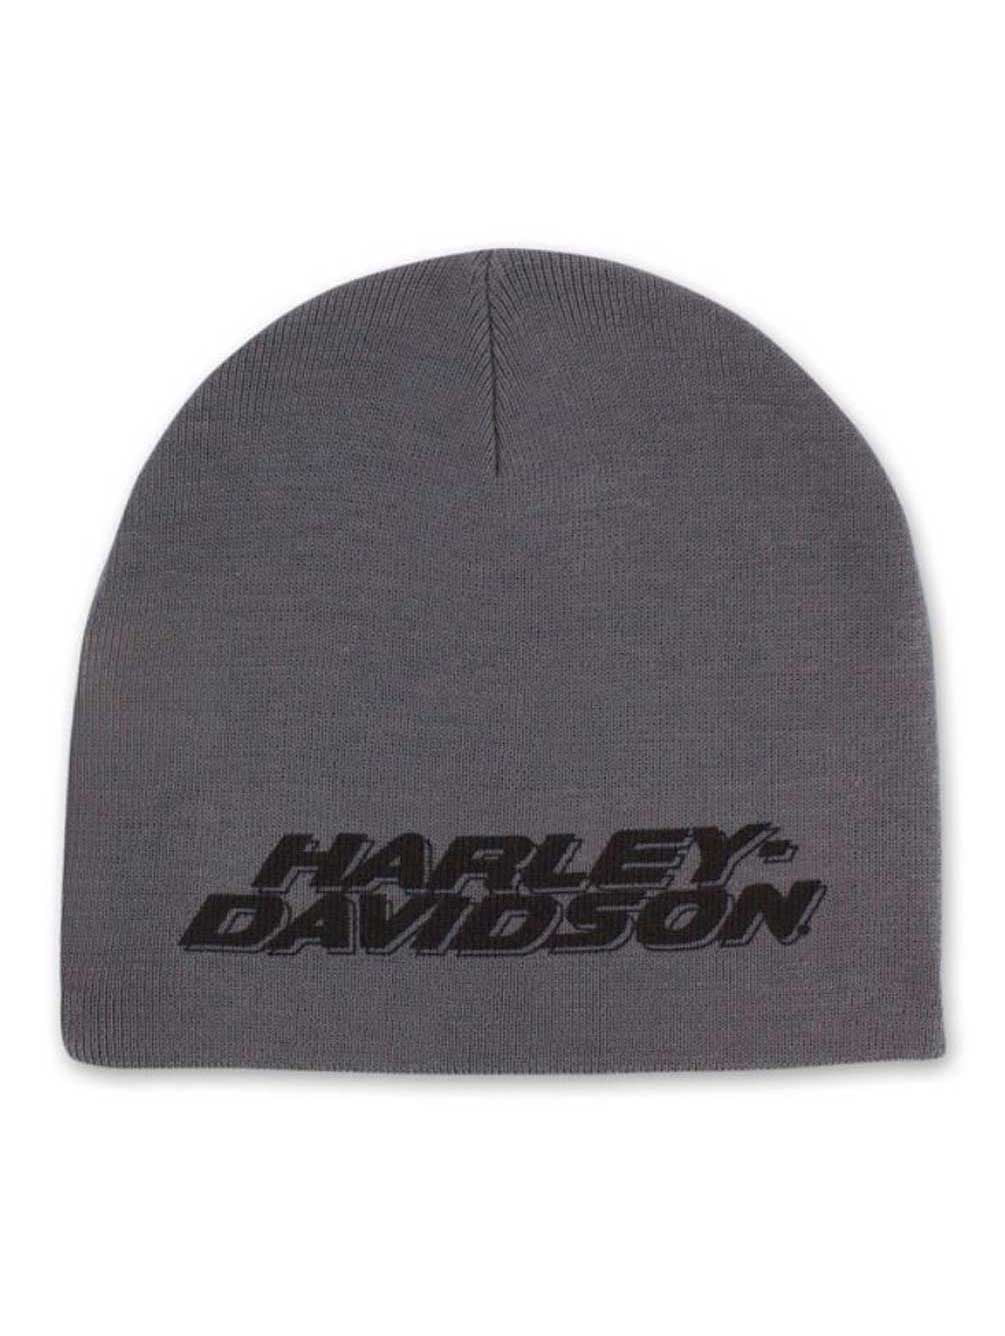 Harley-Davidson Men's Printed H-D Polyester Knit Beanie Cap - Gray ...